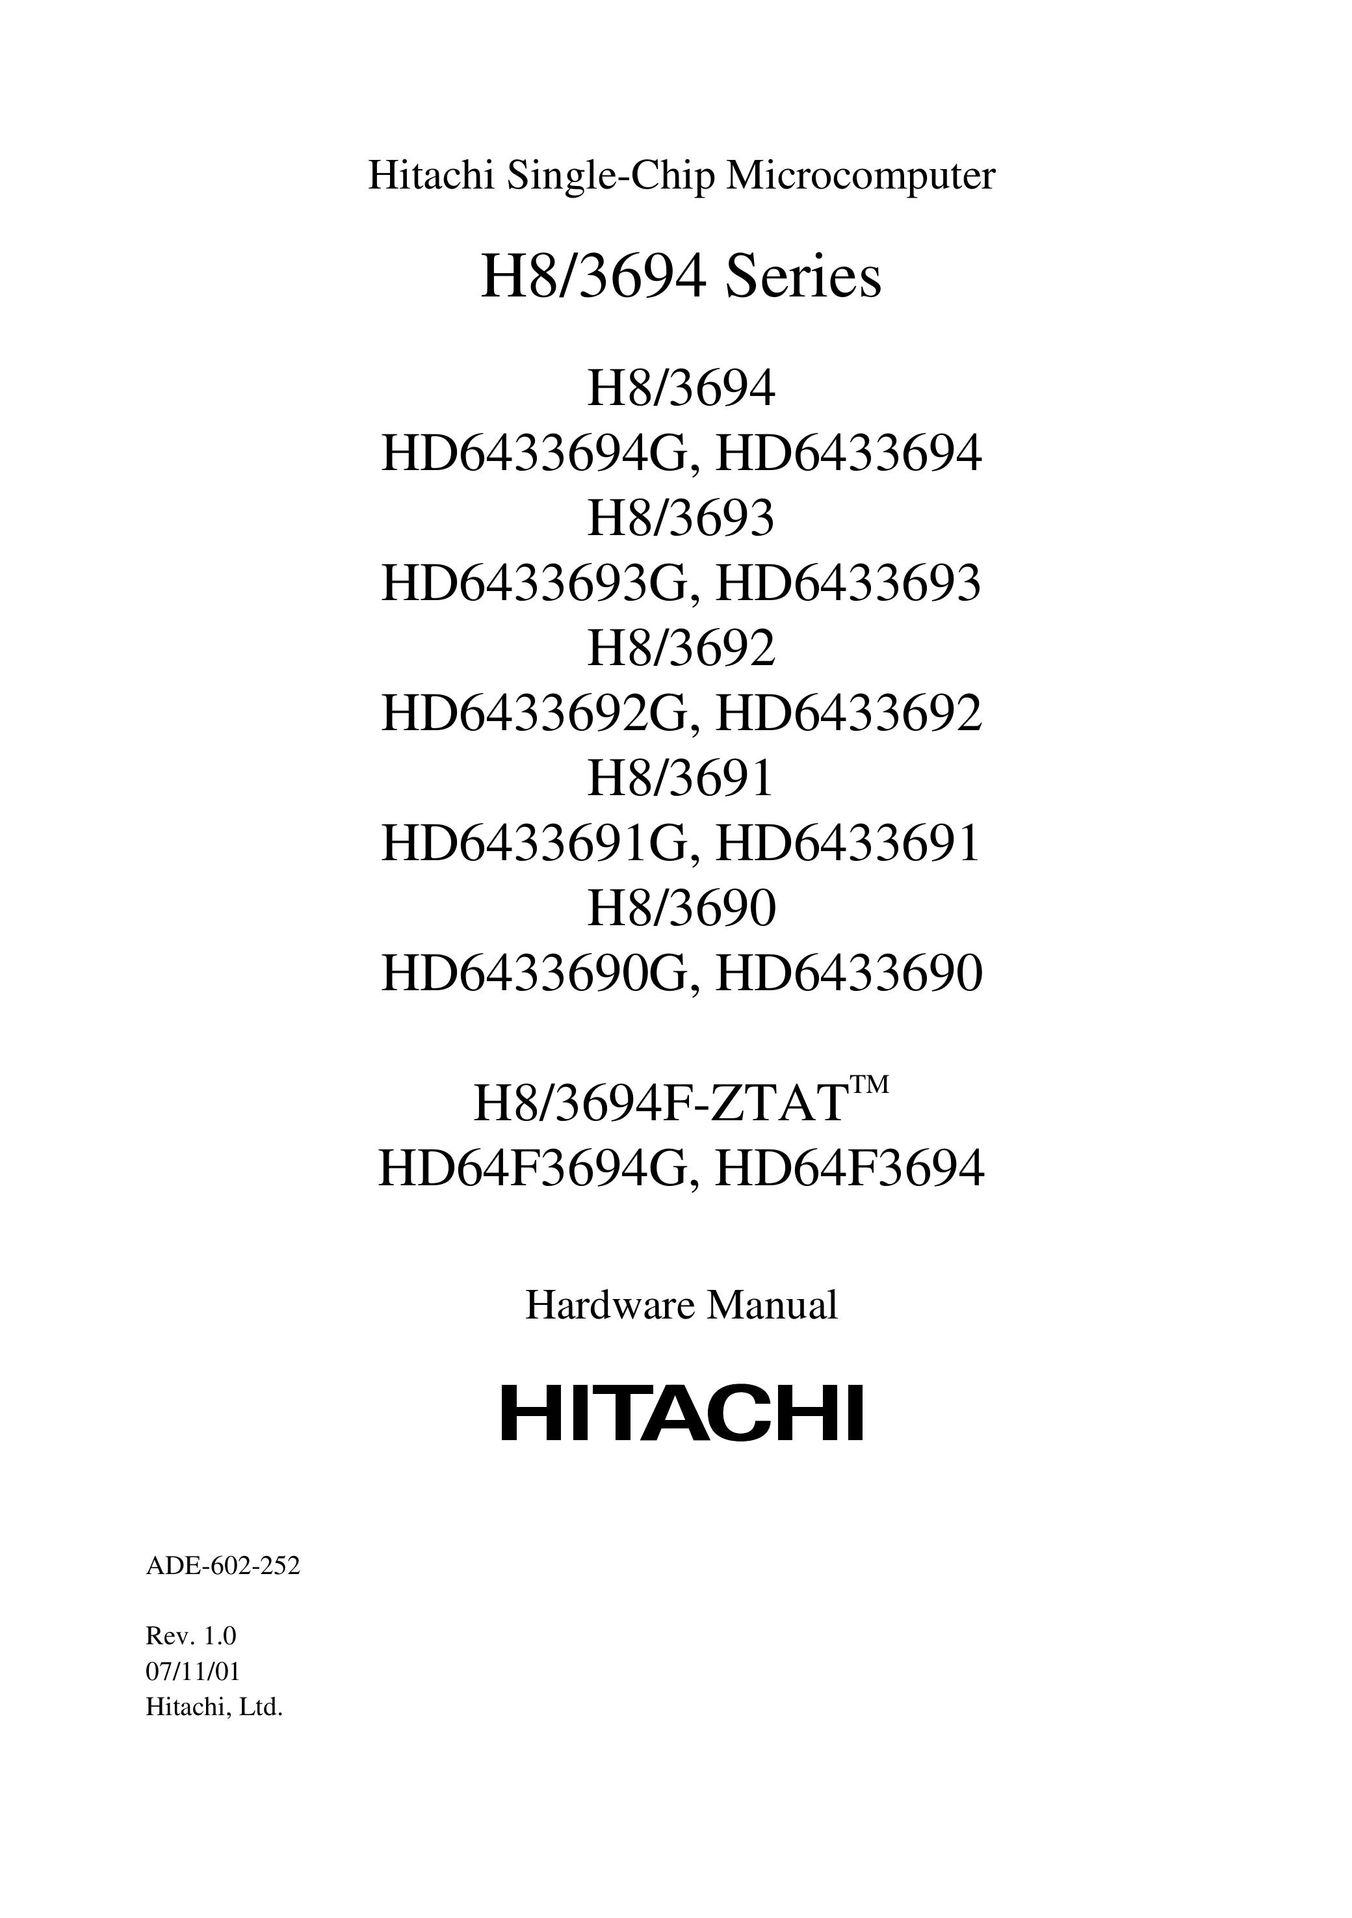 Hitachi HD6433694G TV Mount User Manual